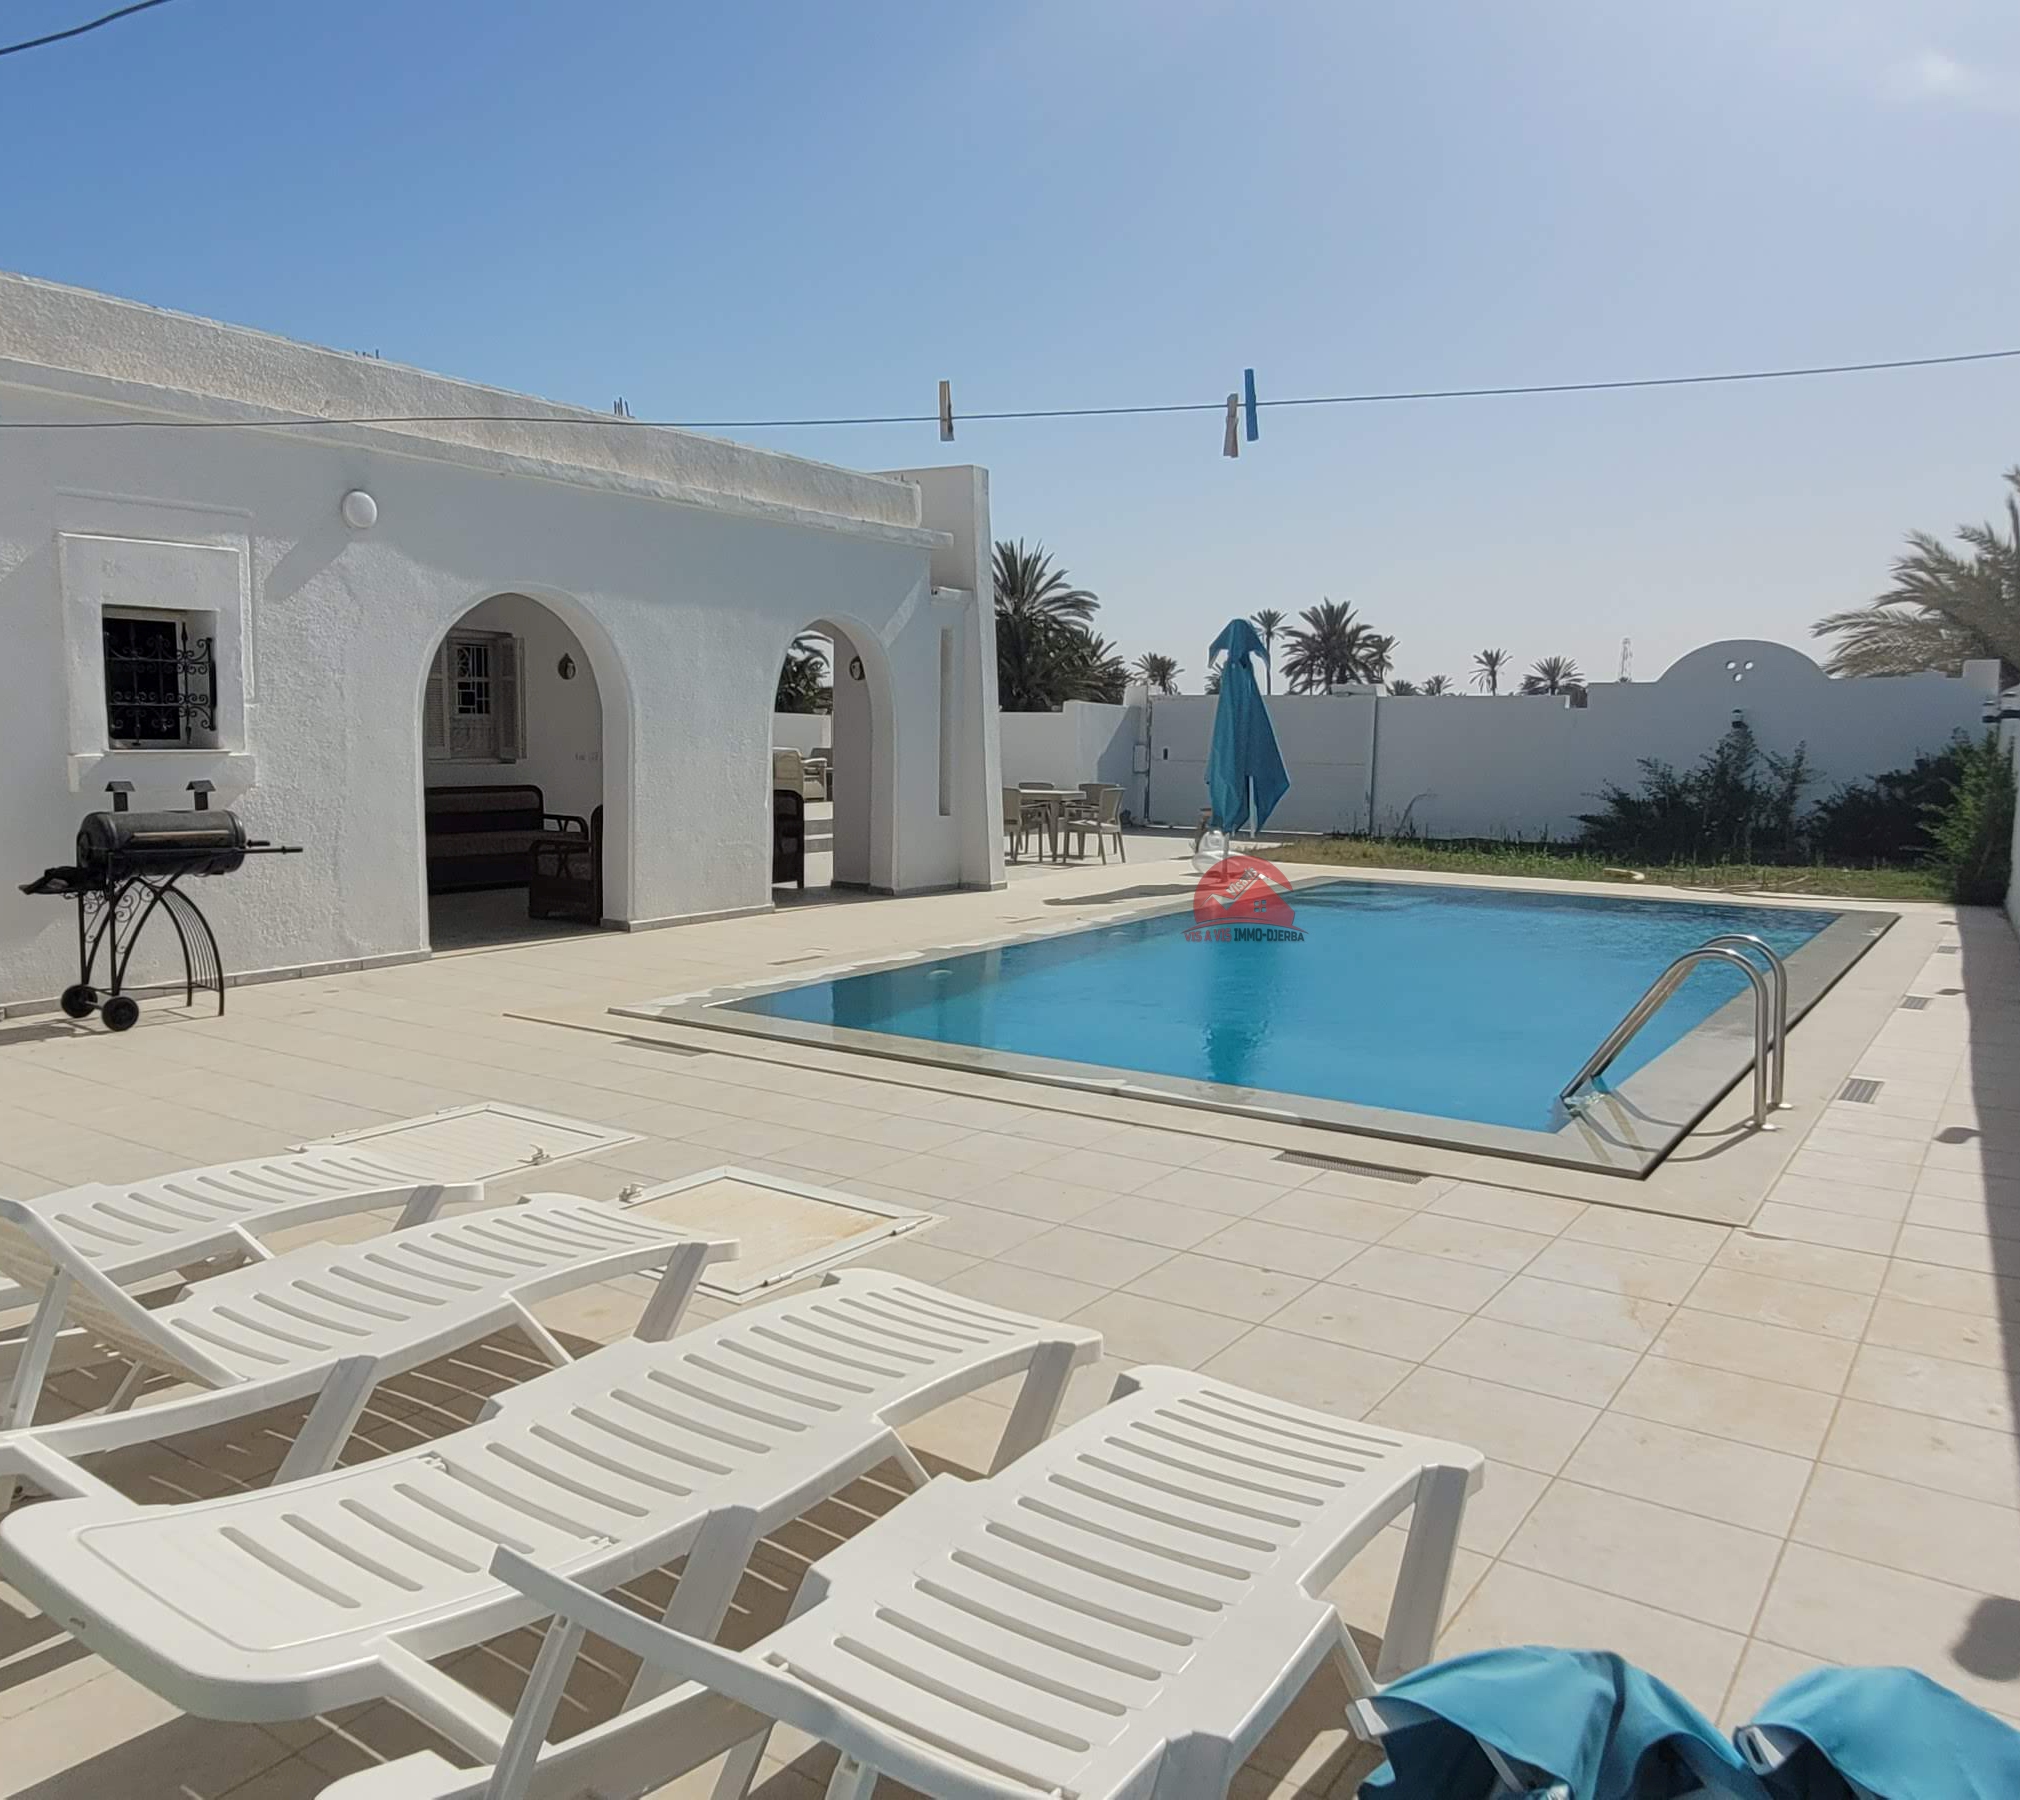 Location grande villa avec piscine à Tezdaine Djerba - Réf L692